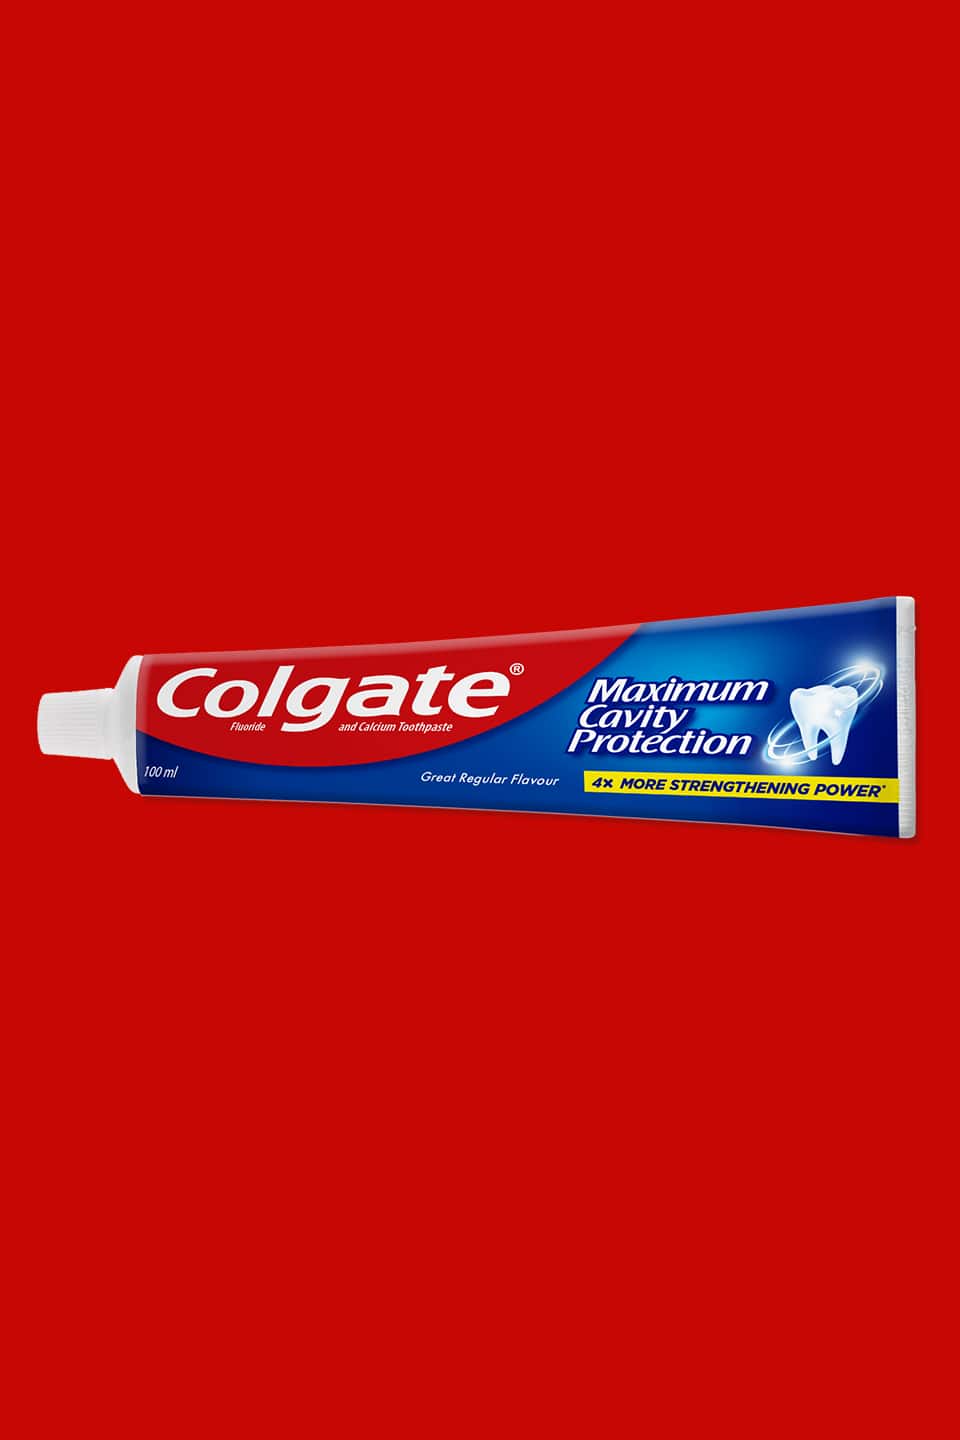 Colgate® Maximun cavity protection